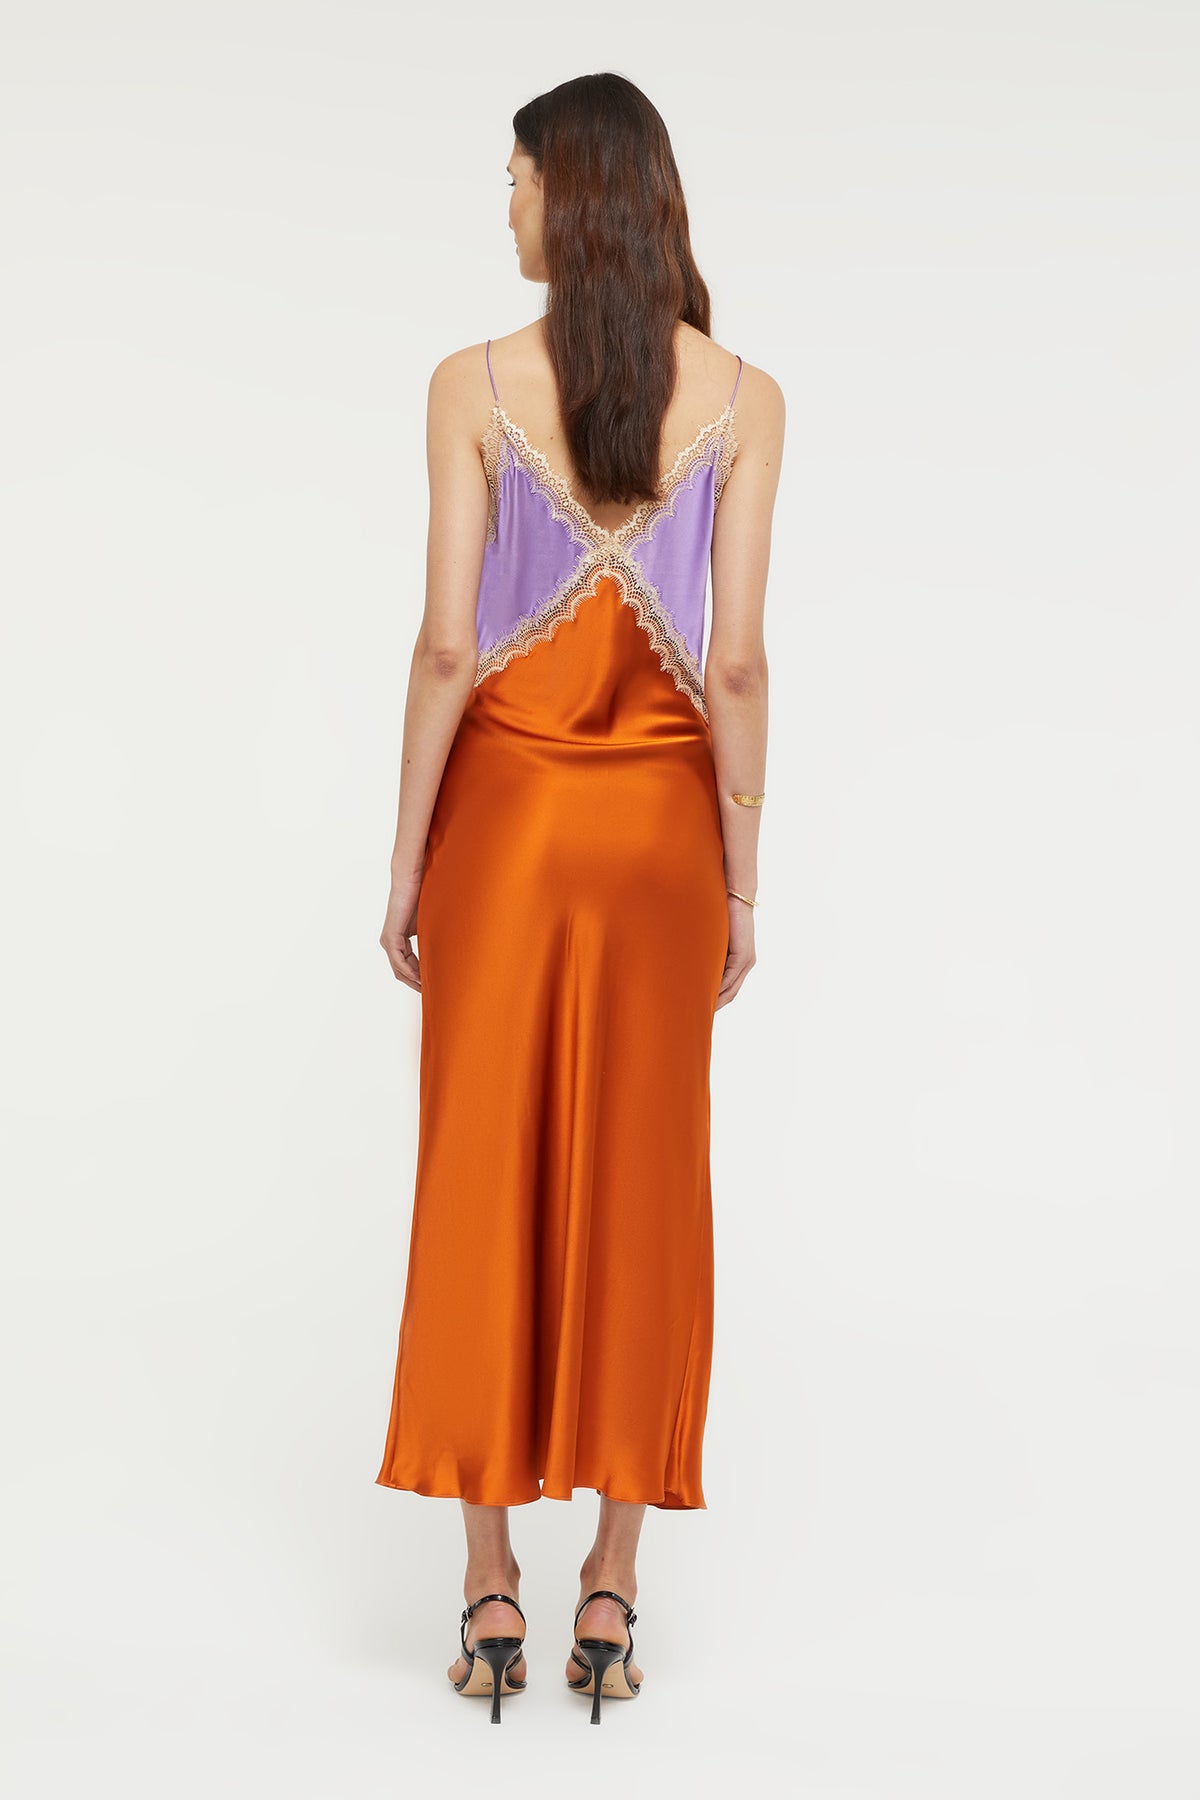 Sadie Dress in Amethyst/Sunset - 100% Silk | Ginia RTW